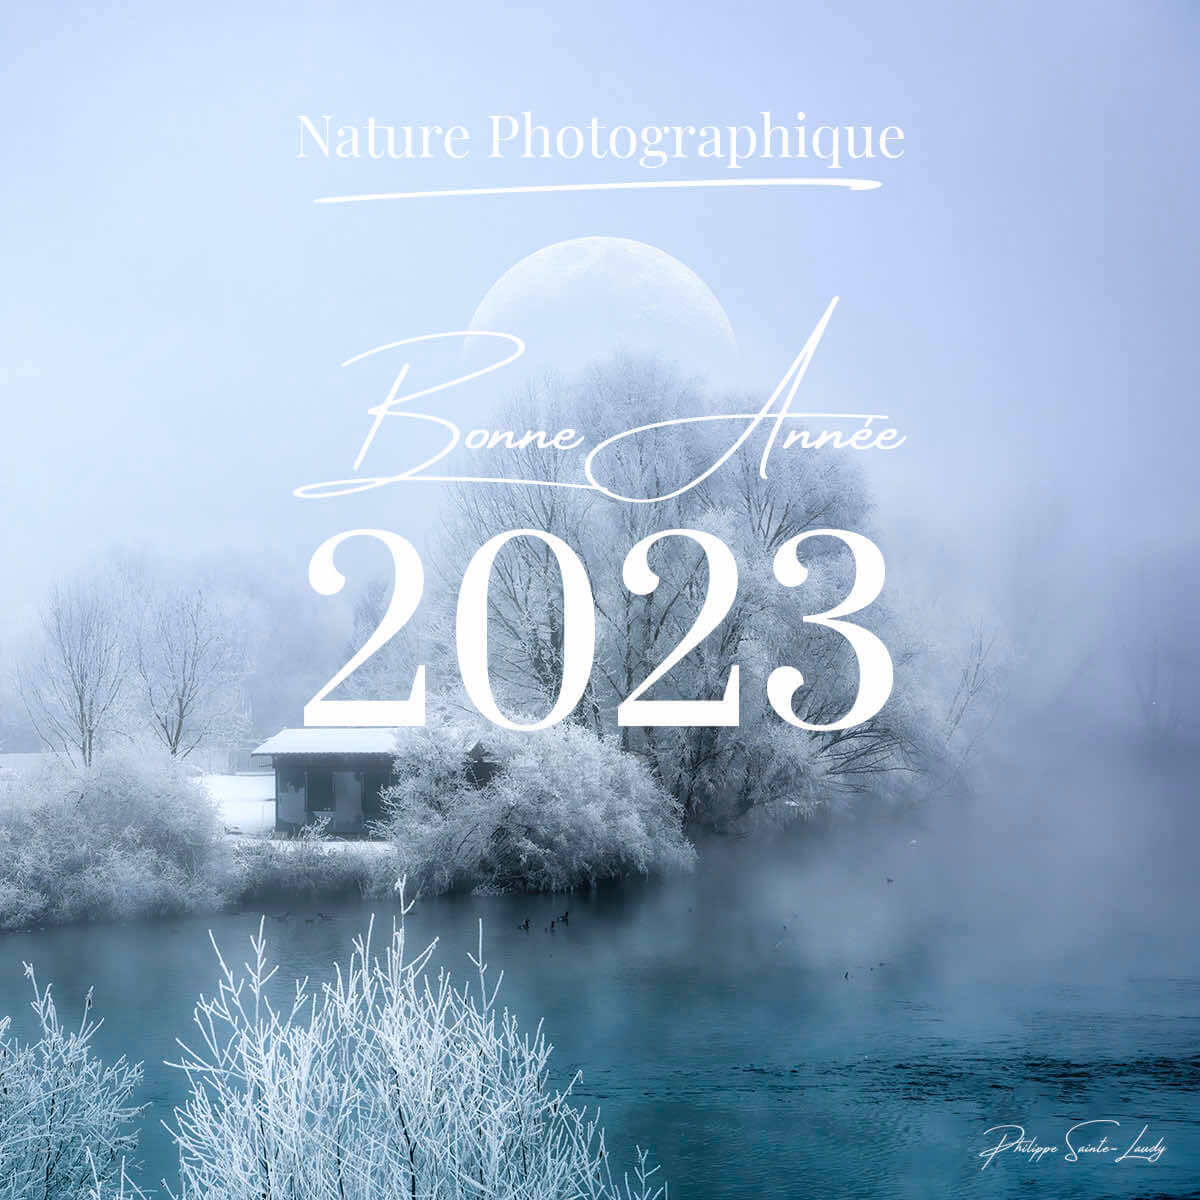 https://www.naturephotographie.com/wp-content/uploads/2022/12/Bonne-Annee-2023.jpg